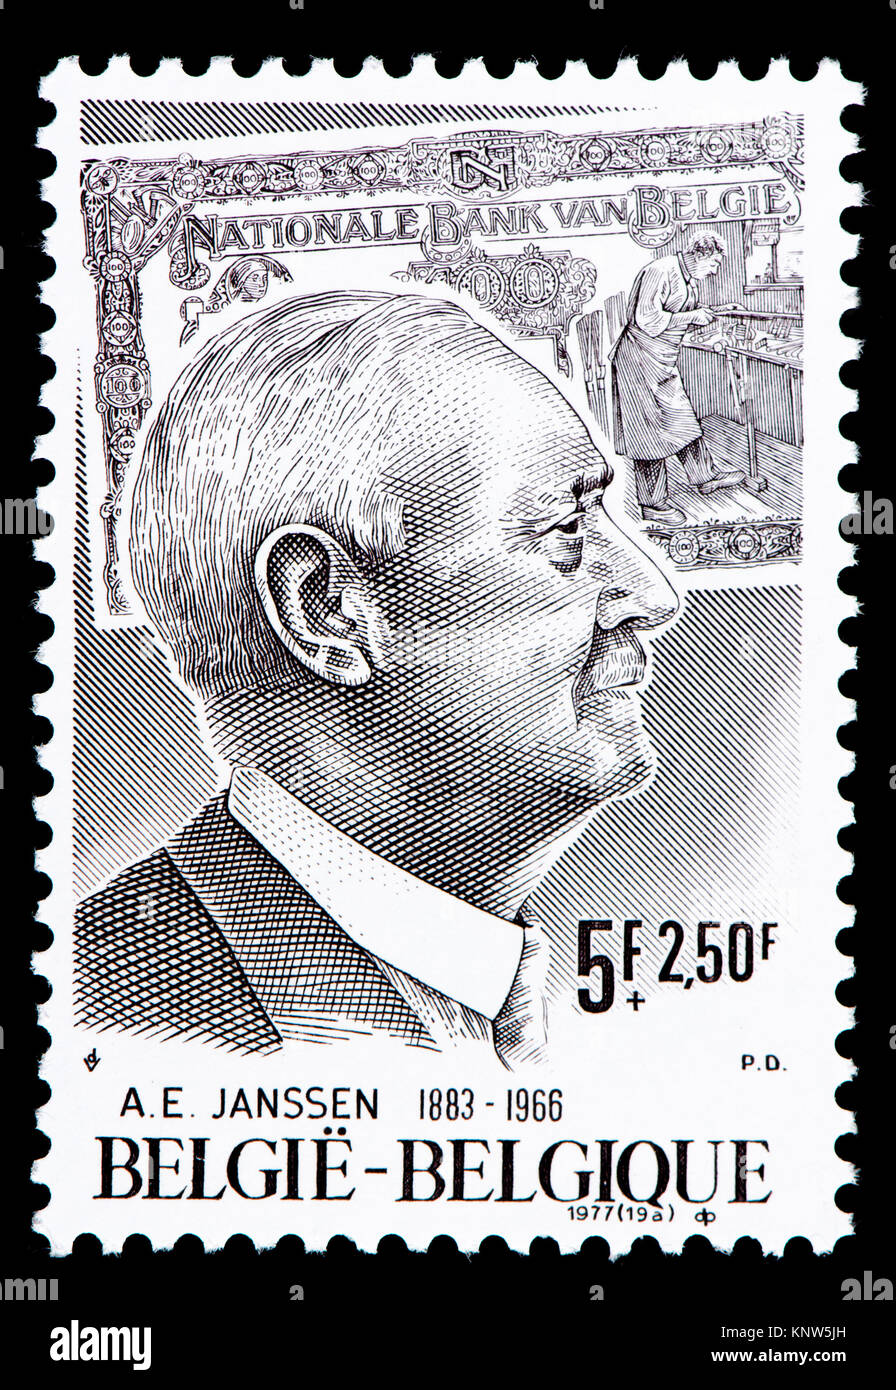 Sello belga (1977) : Edouard Marie Henri Albert Janssen (1883 -1966) político católico belga Foto de stock